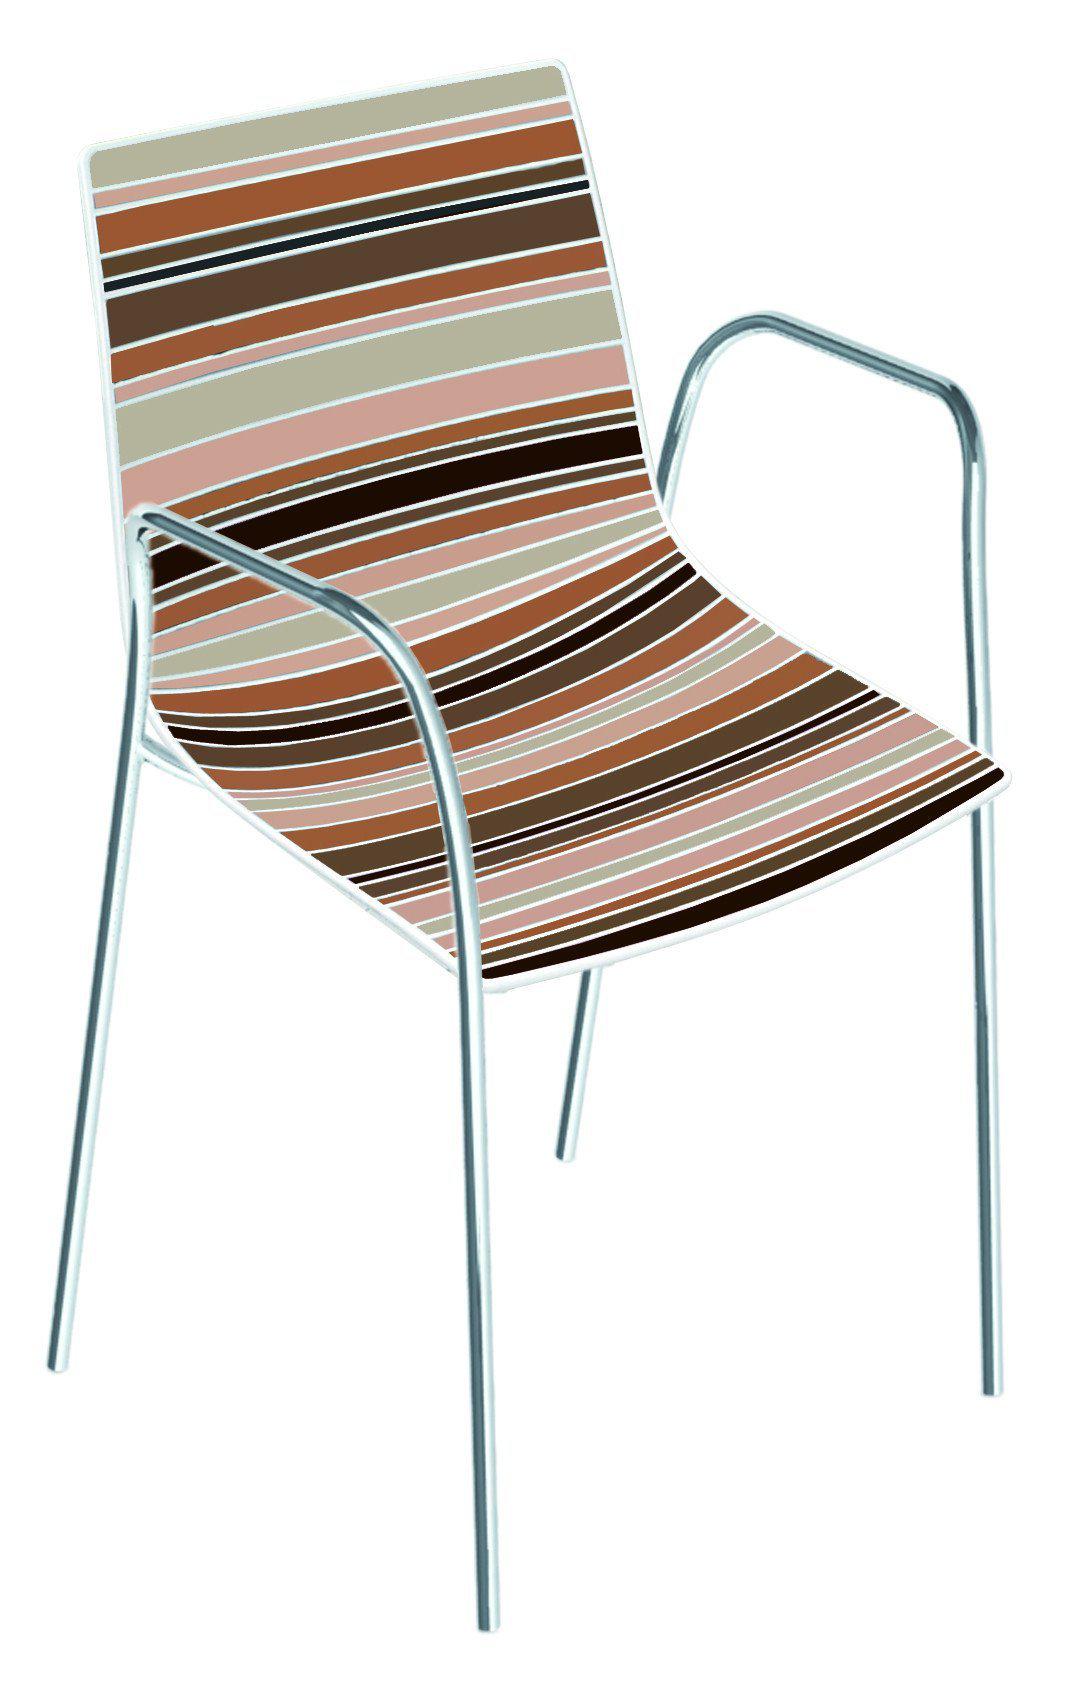 Colorfive Armchair c/w Metal Legs-Gaber-Contract Furniture Store